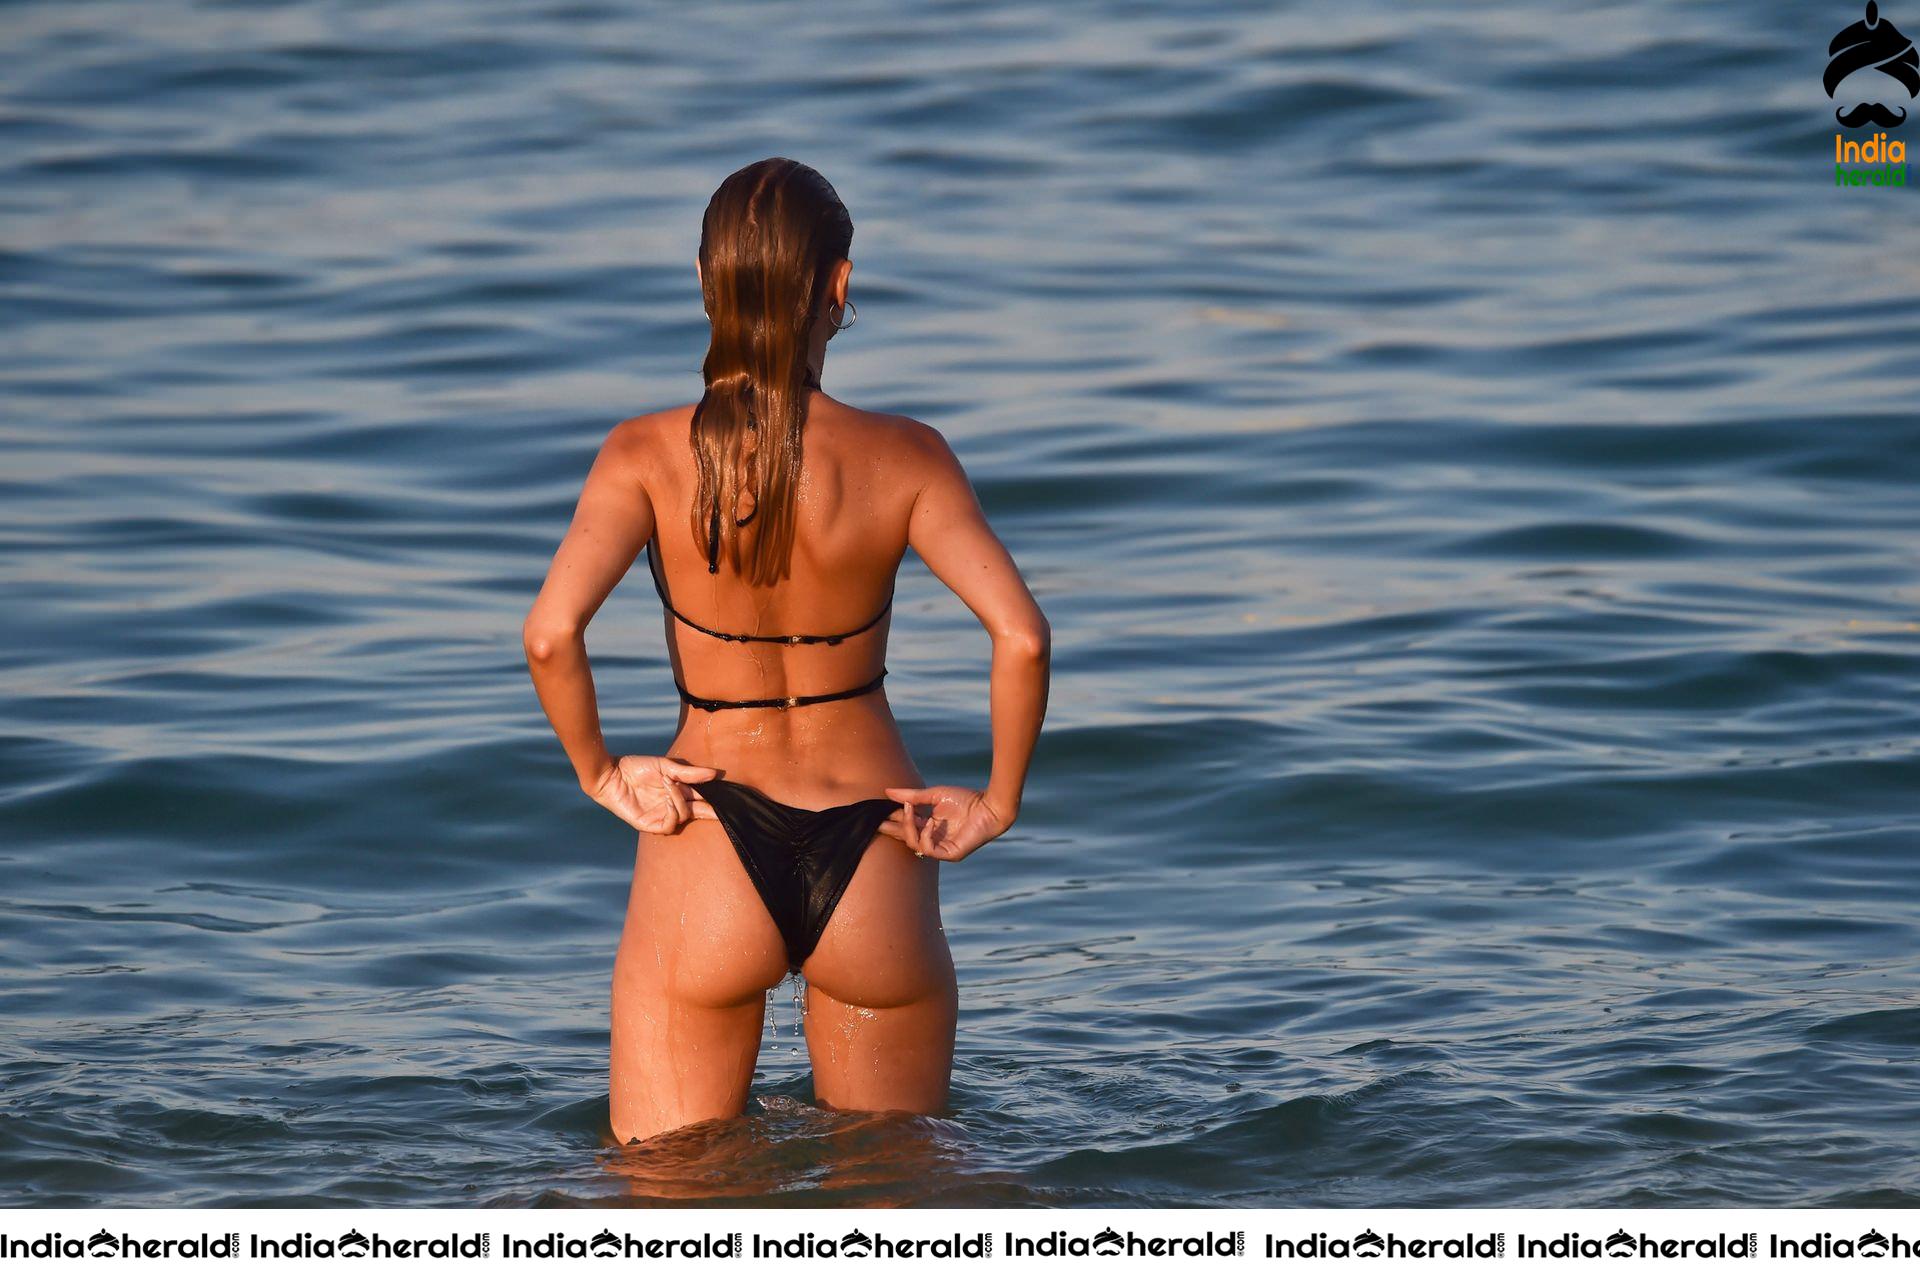 Kimberley Garner in Black Bikini on the beach in Miami during Quarantine period